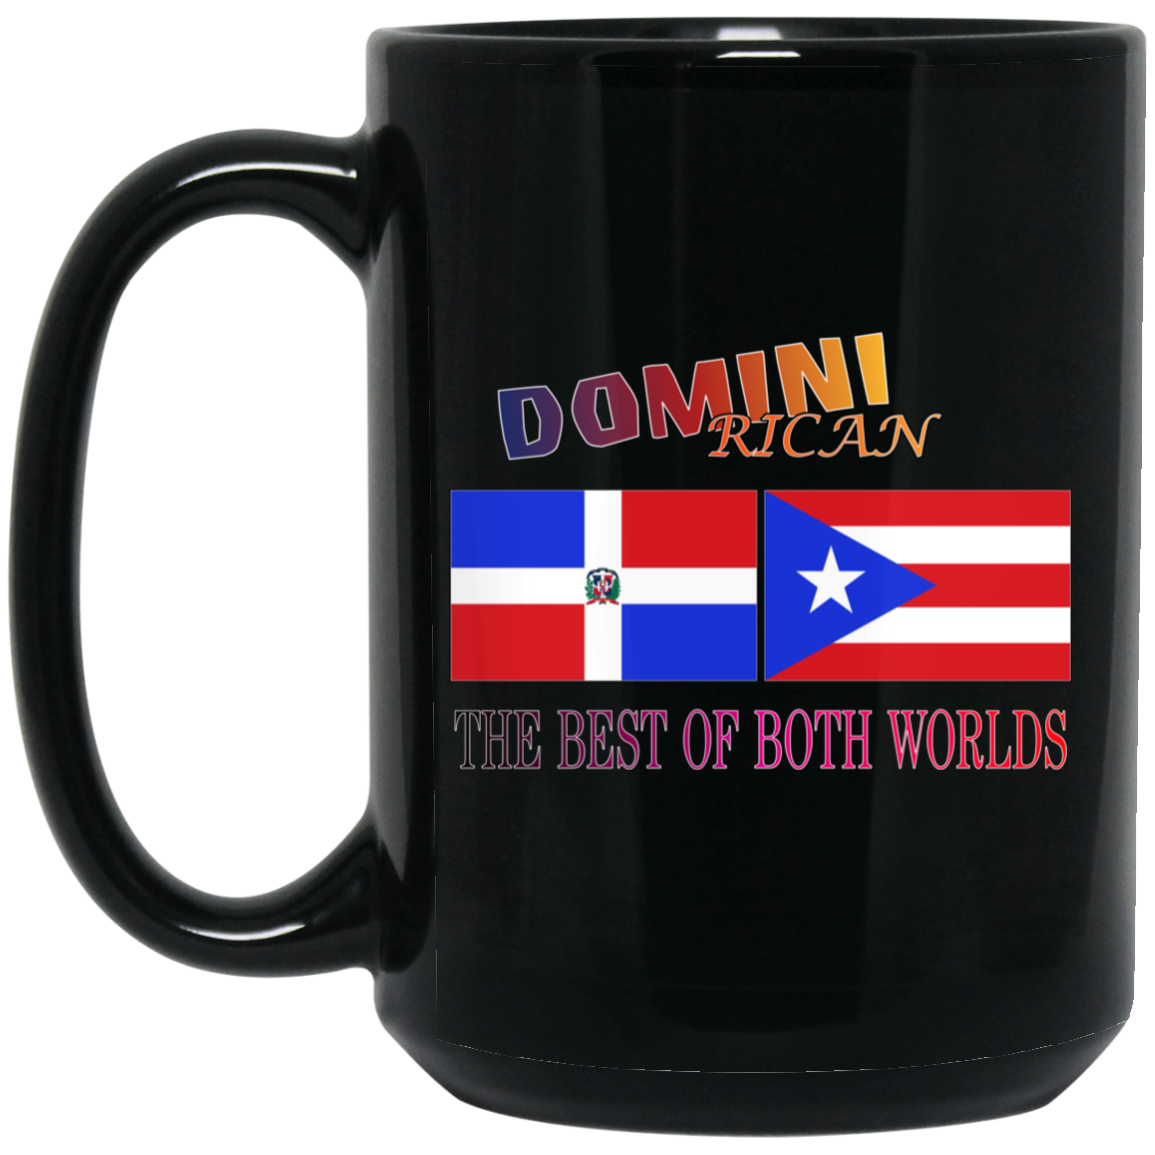 Domini Rican 15 oz. Black Mug - Puerto Rican Pride